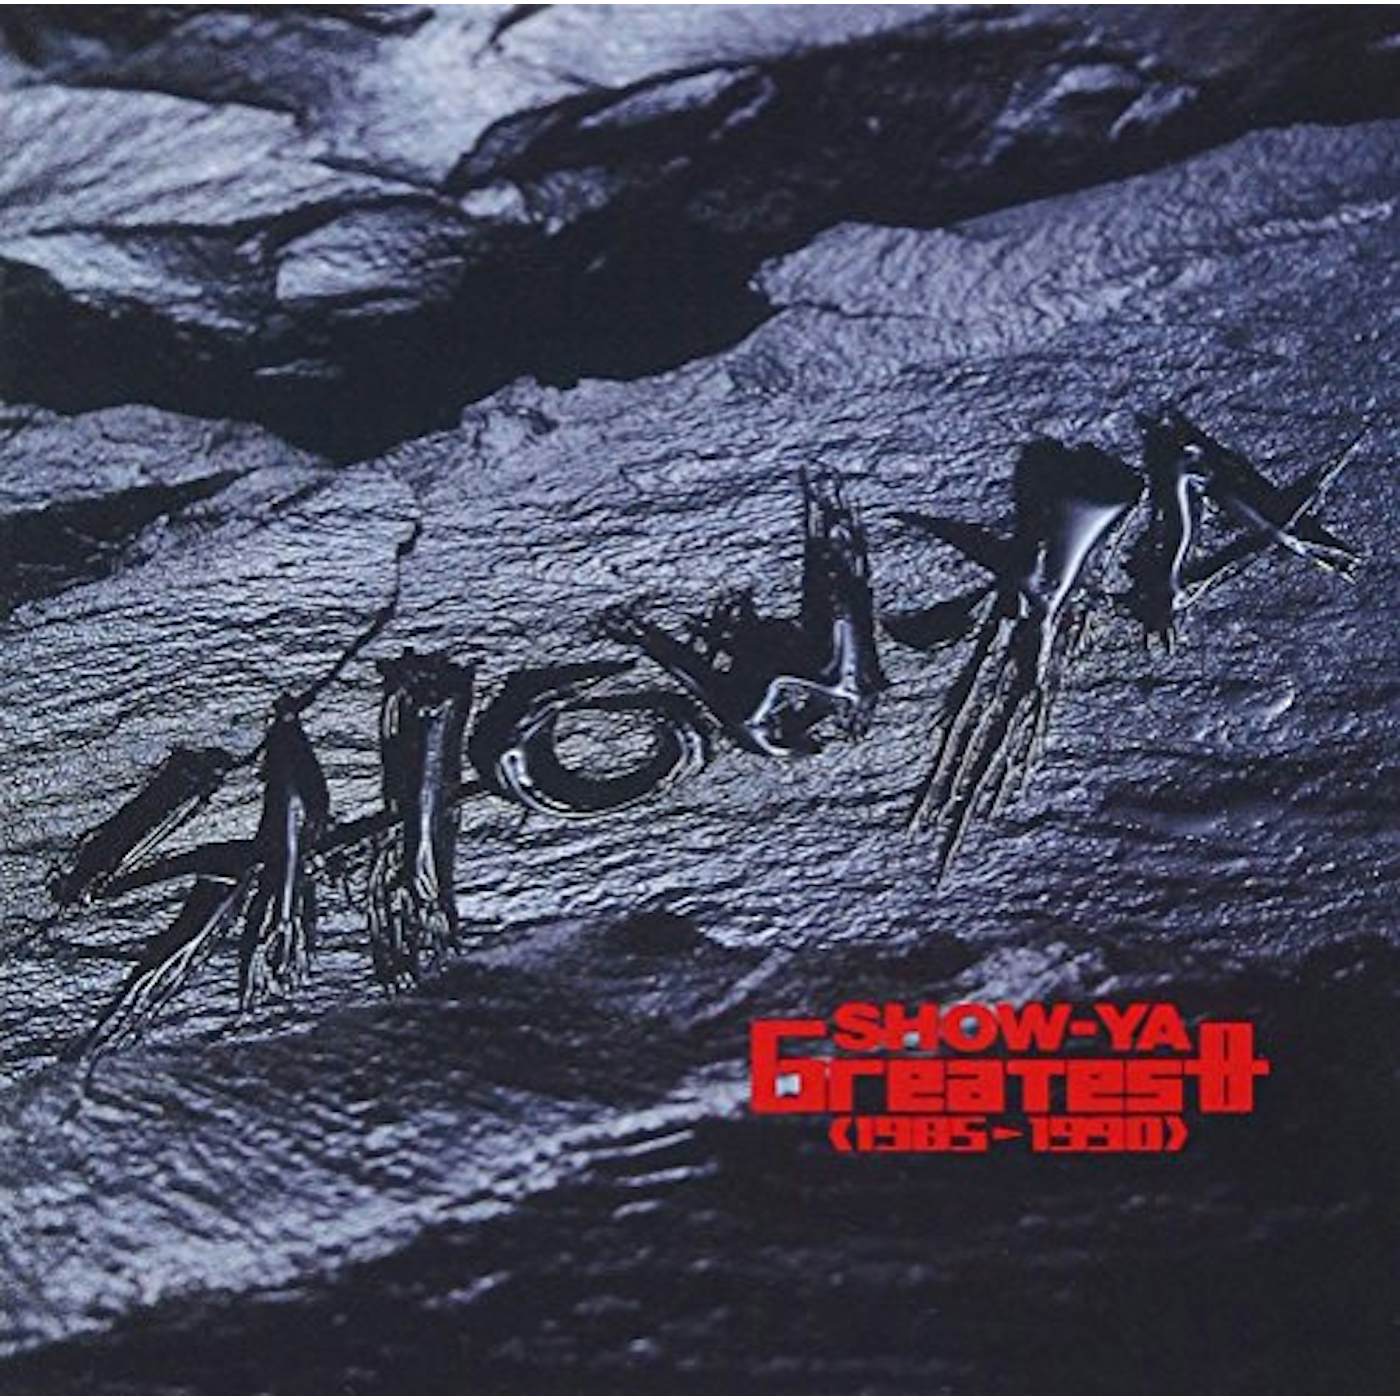 SHOW-YA GREATEST 1985-1990 CD